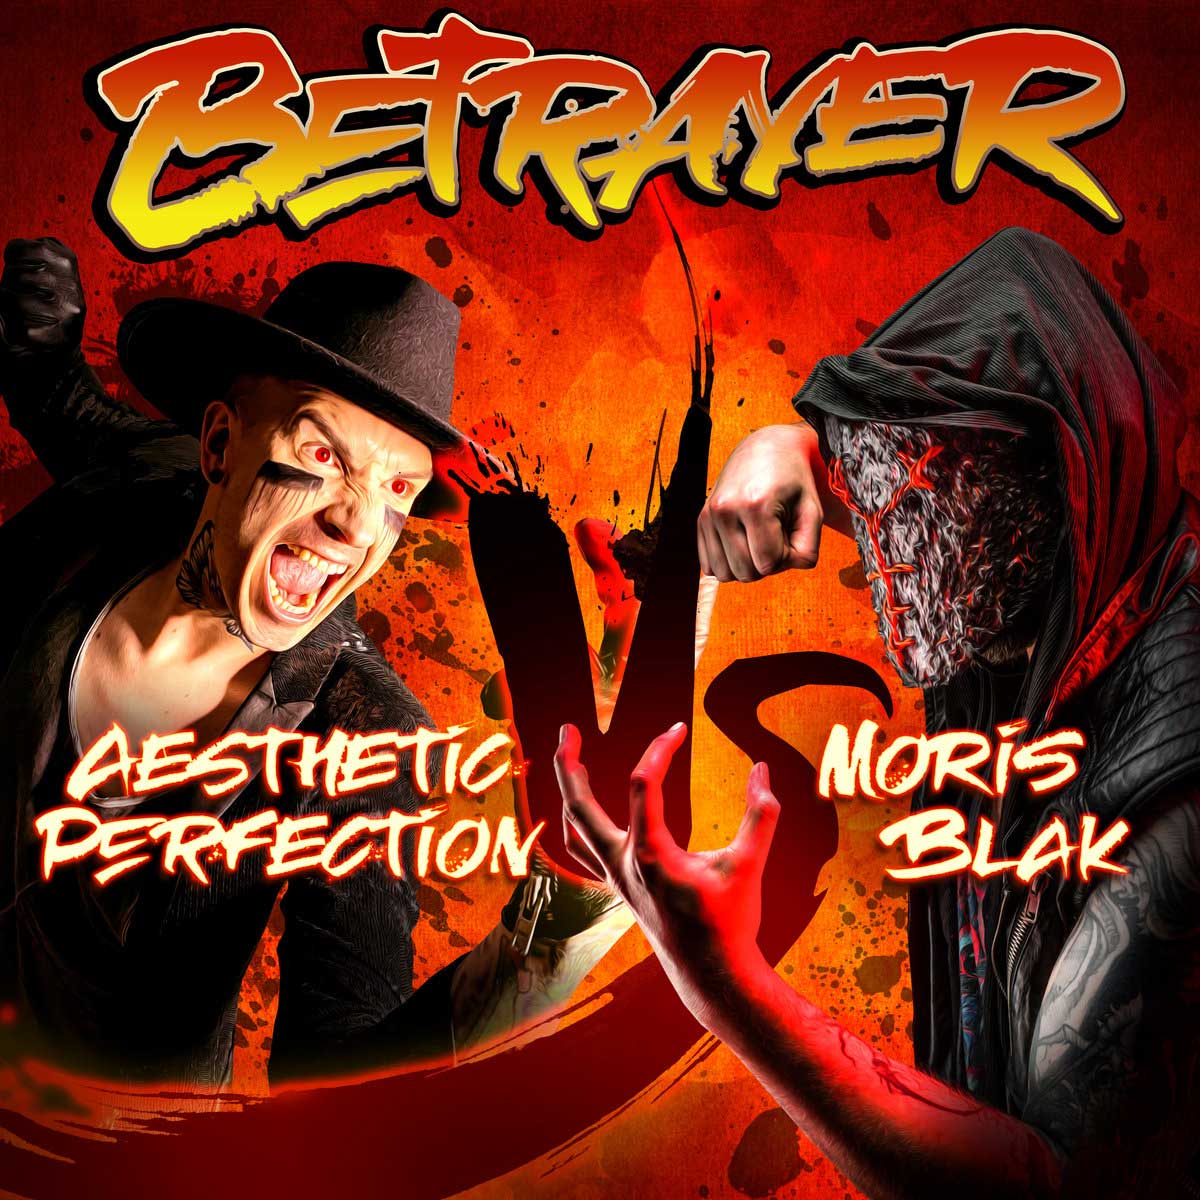 Aesthetic Perfection & Moris Blak - Betrayer - Aesthetic Perfection & Moris Blak - Betrayer